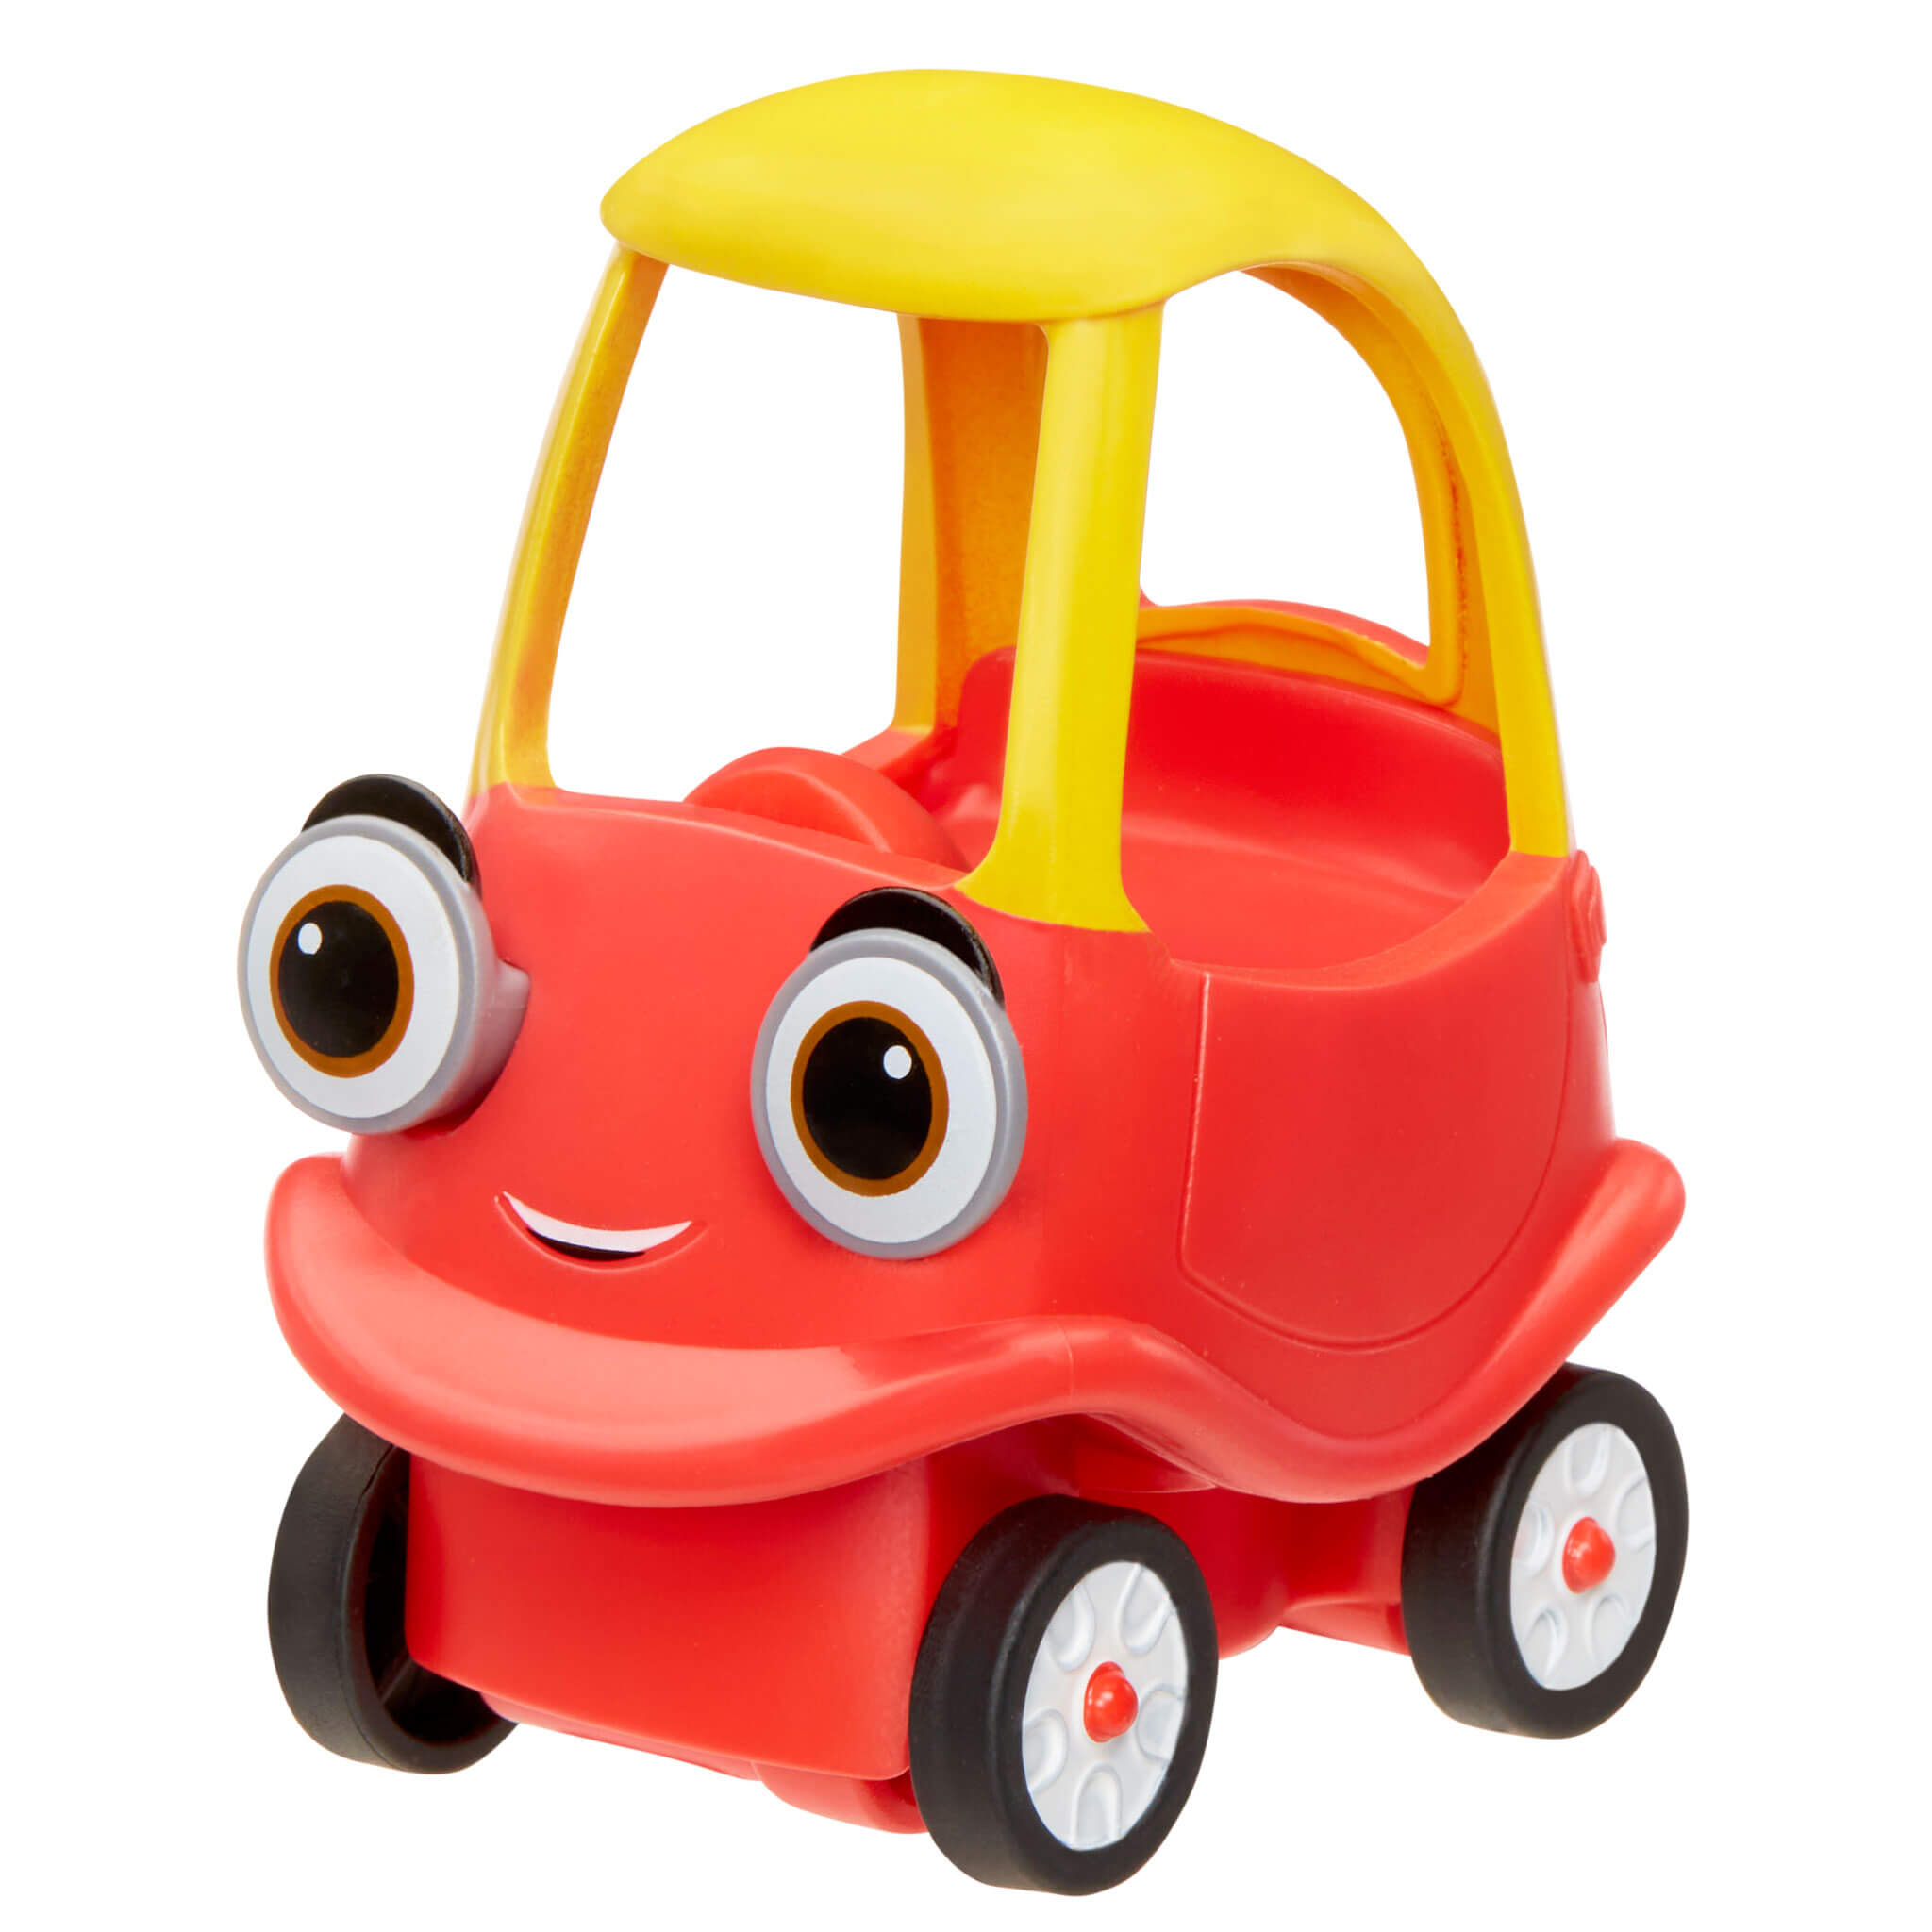 Little Tikes RC Bumper Cars  Little Tikes – Official Little Tikes Website